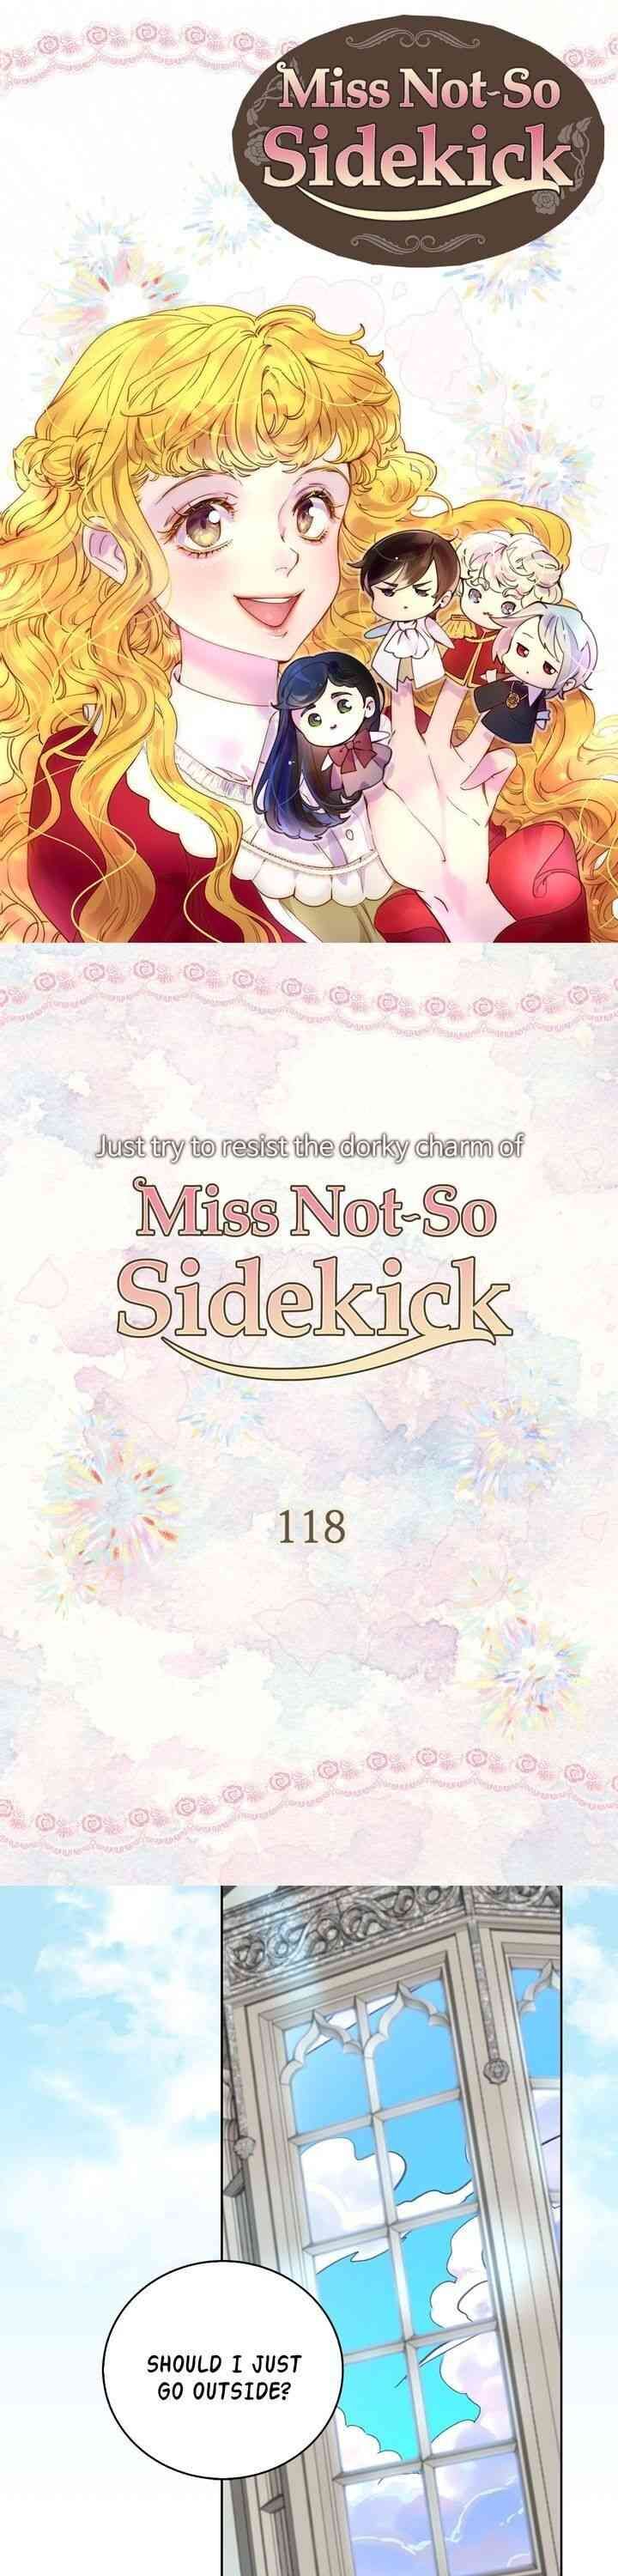 Miss Not-So Sidekick Chapter 118 page 1